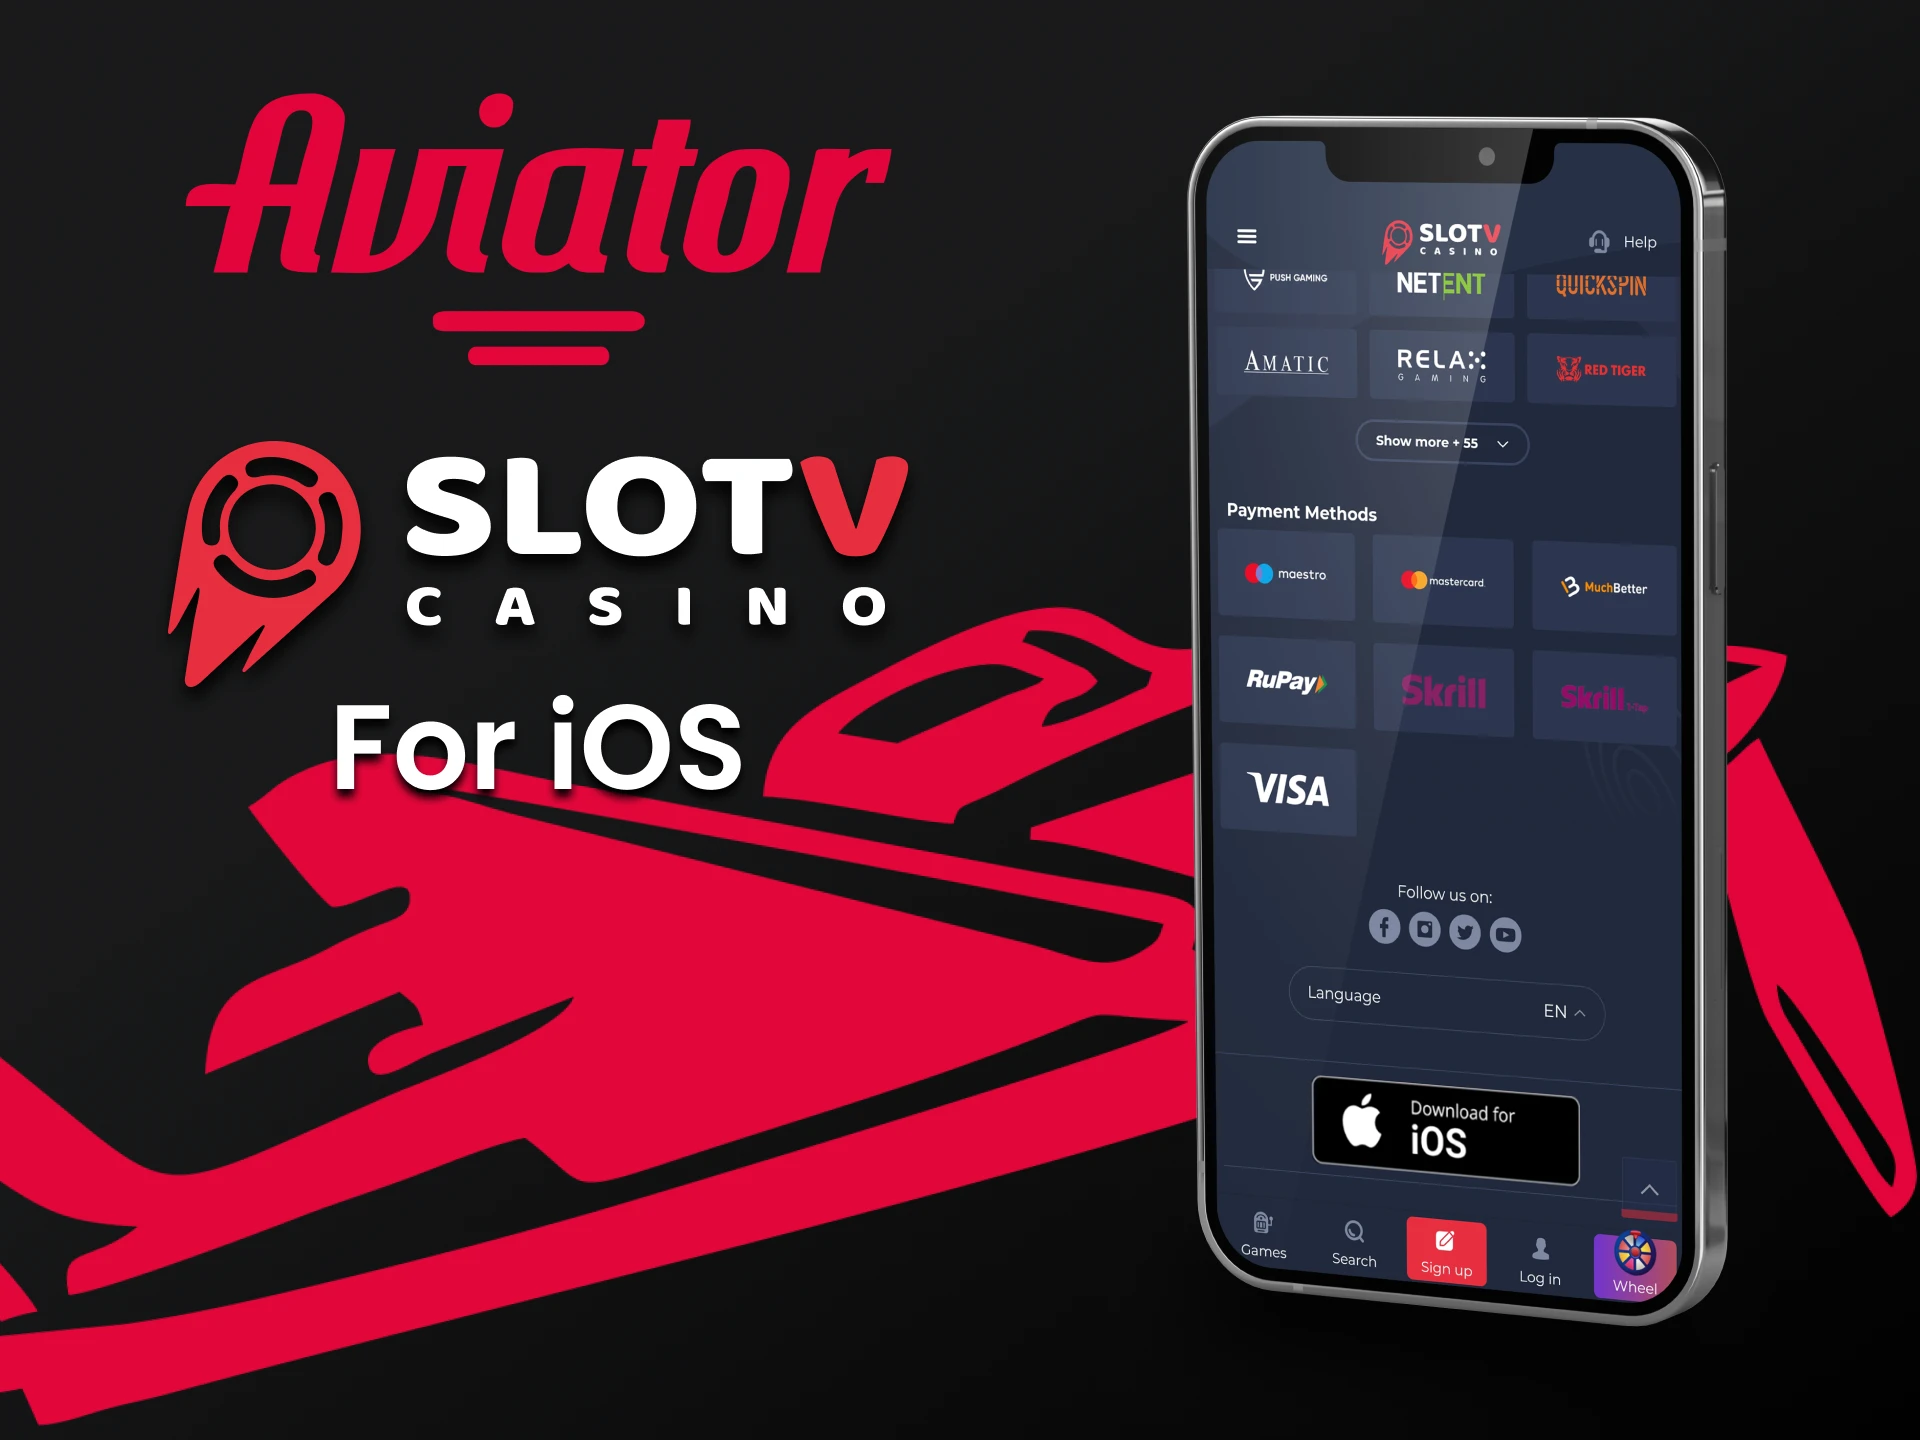 Install the SlotV app on iOS to play Aviator.